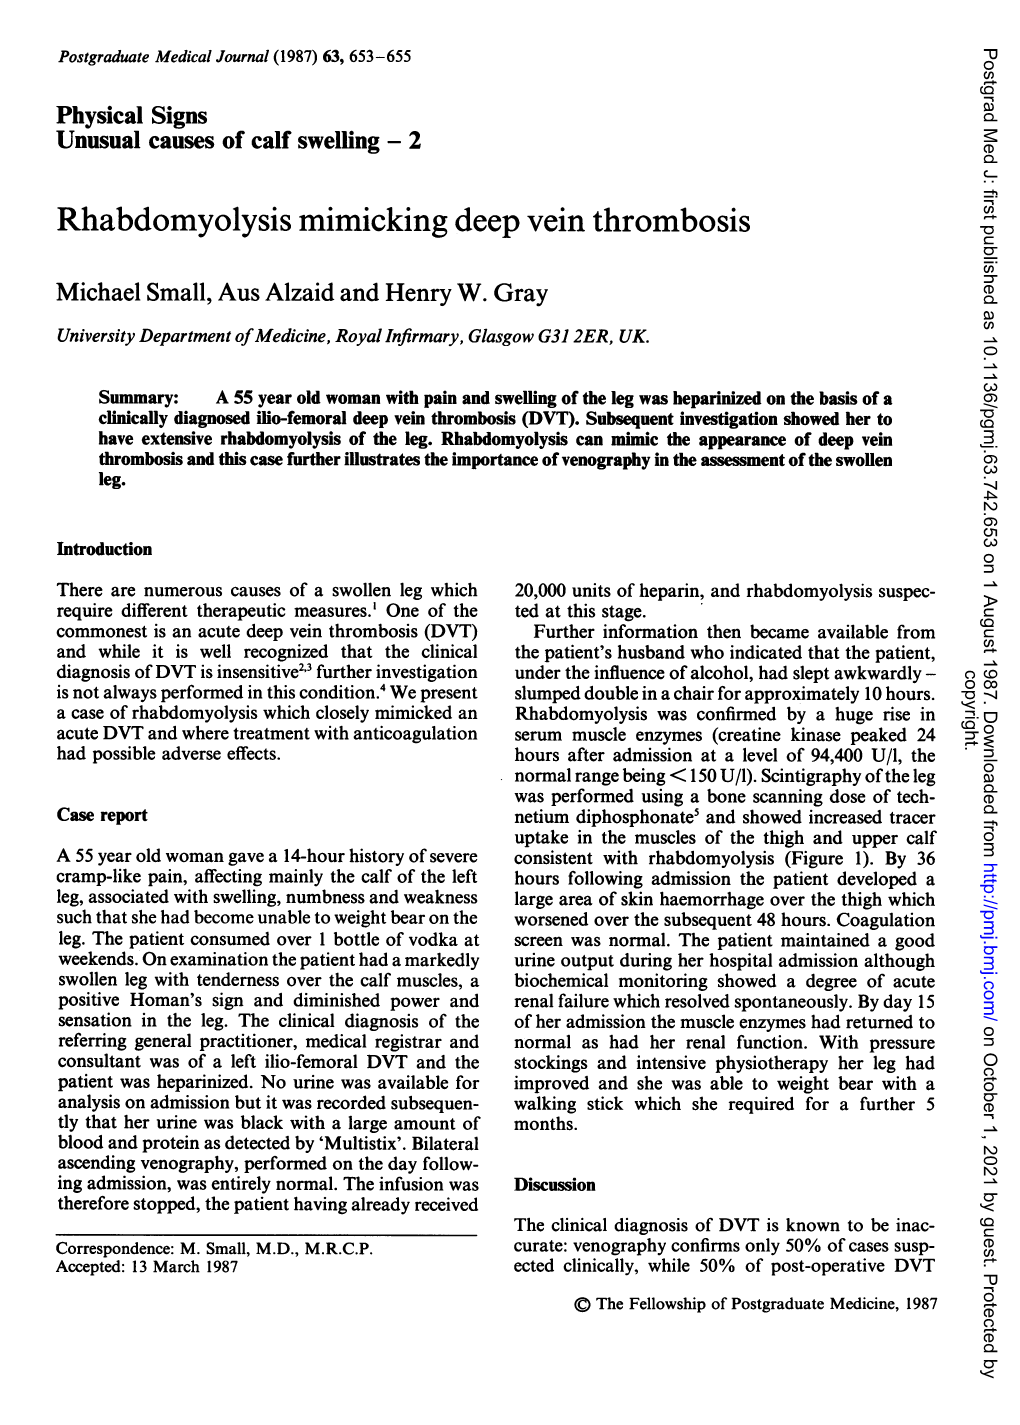 Rhabdomyolysis Mimicking Deep Vein Thrombosis